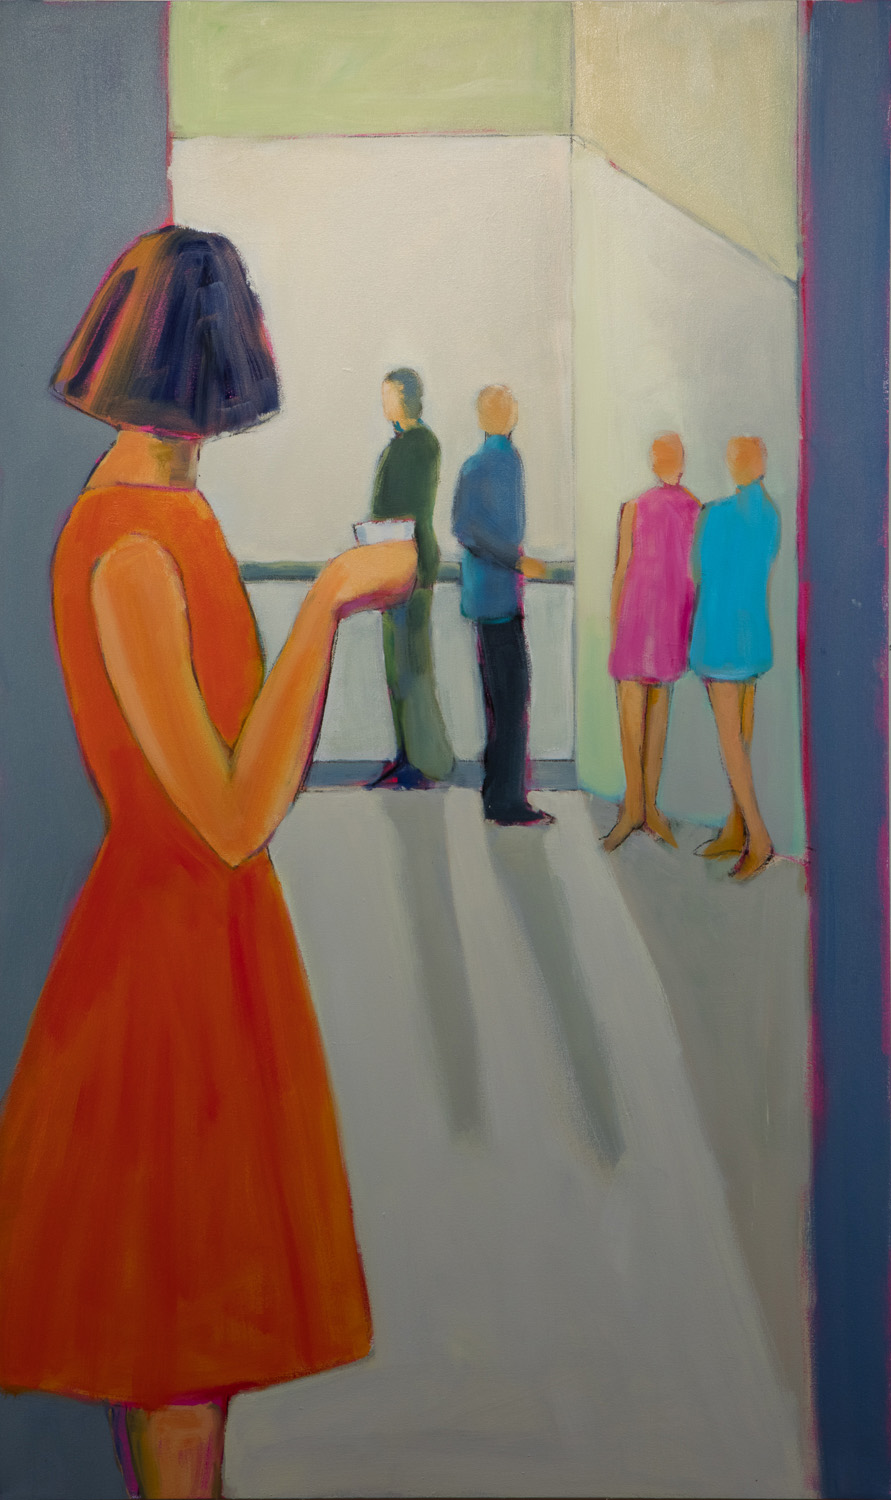  Sarah Benham -  The Balcony   Oil on Canvas, 60 x 36 inches 